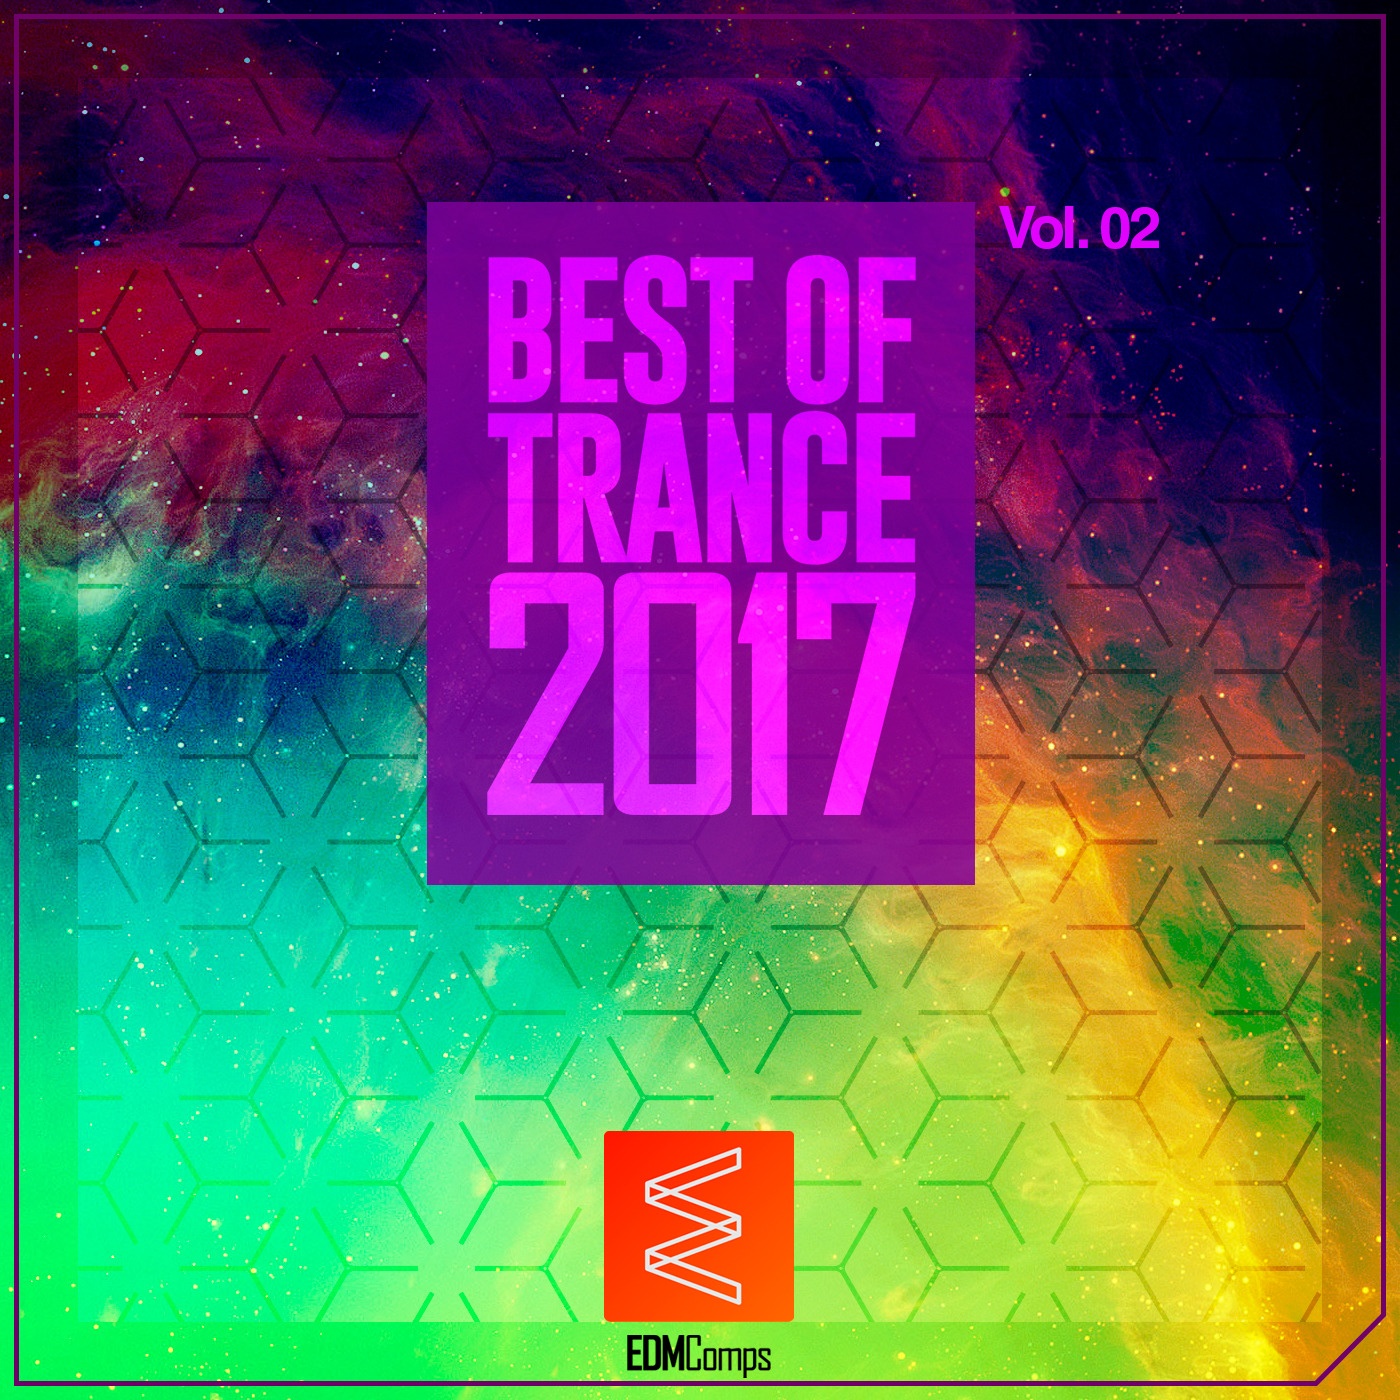 Best of Trance 2017, Vol. 02